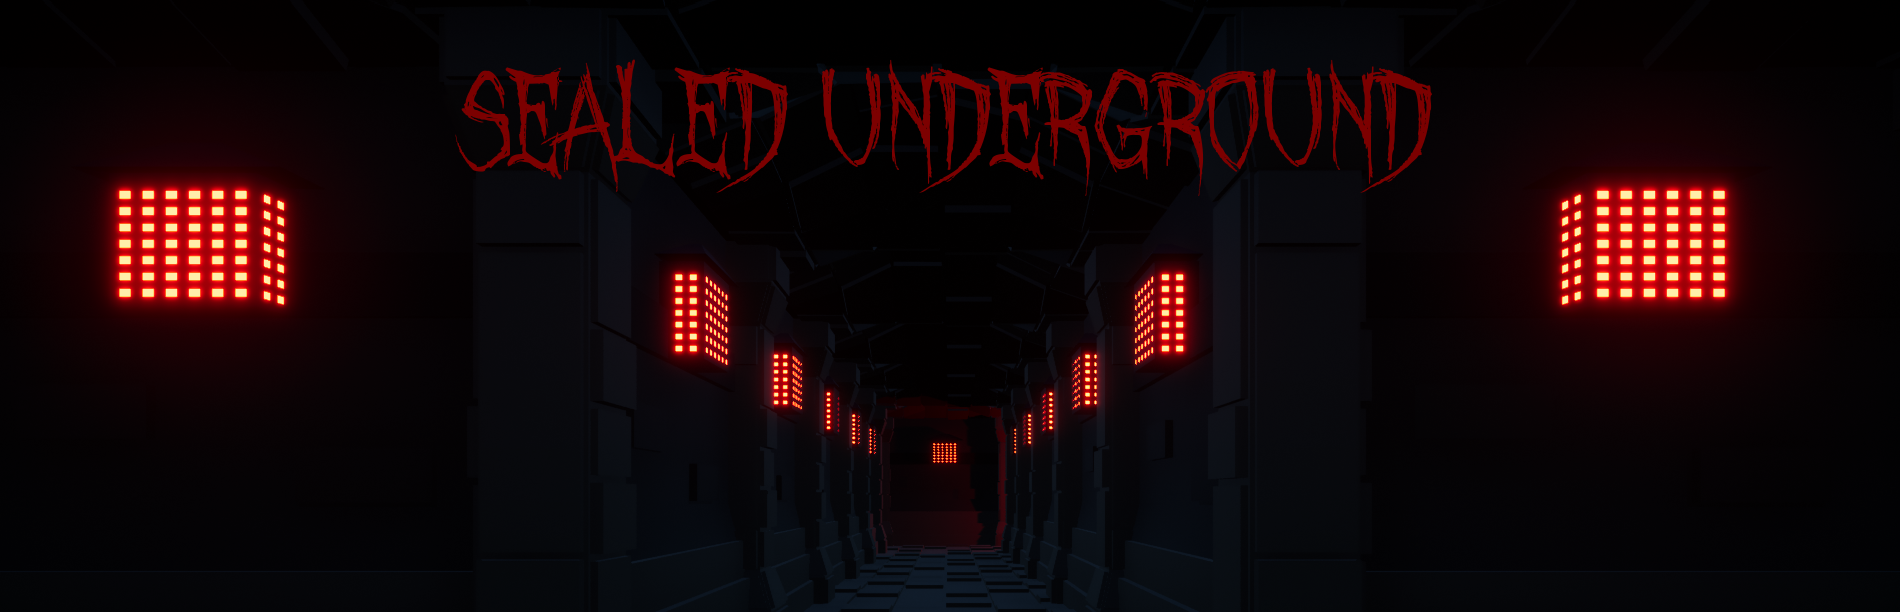 Sealed Underground